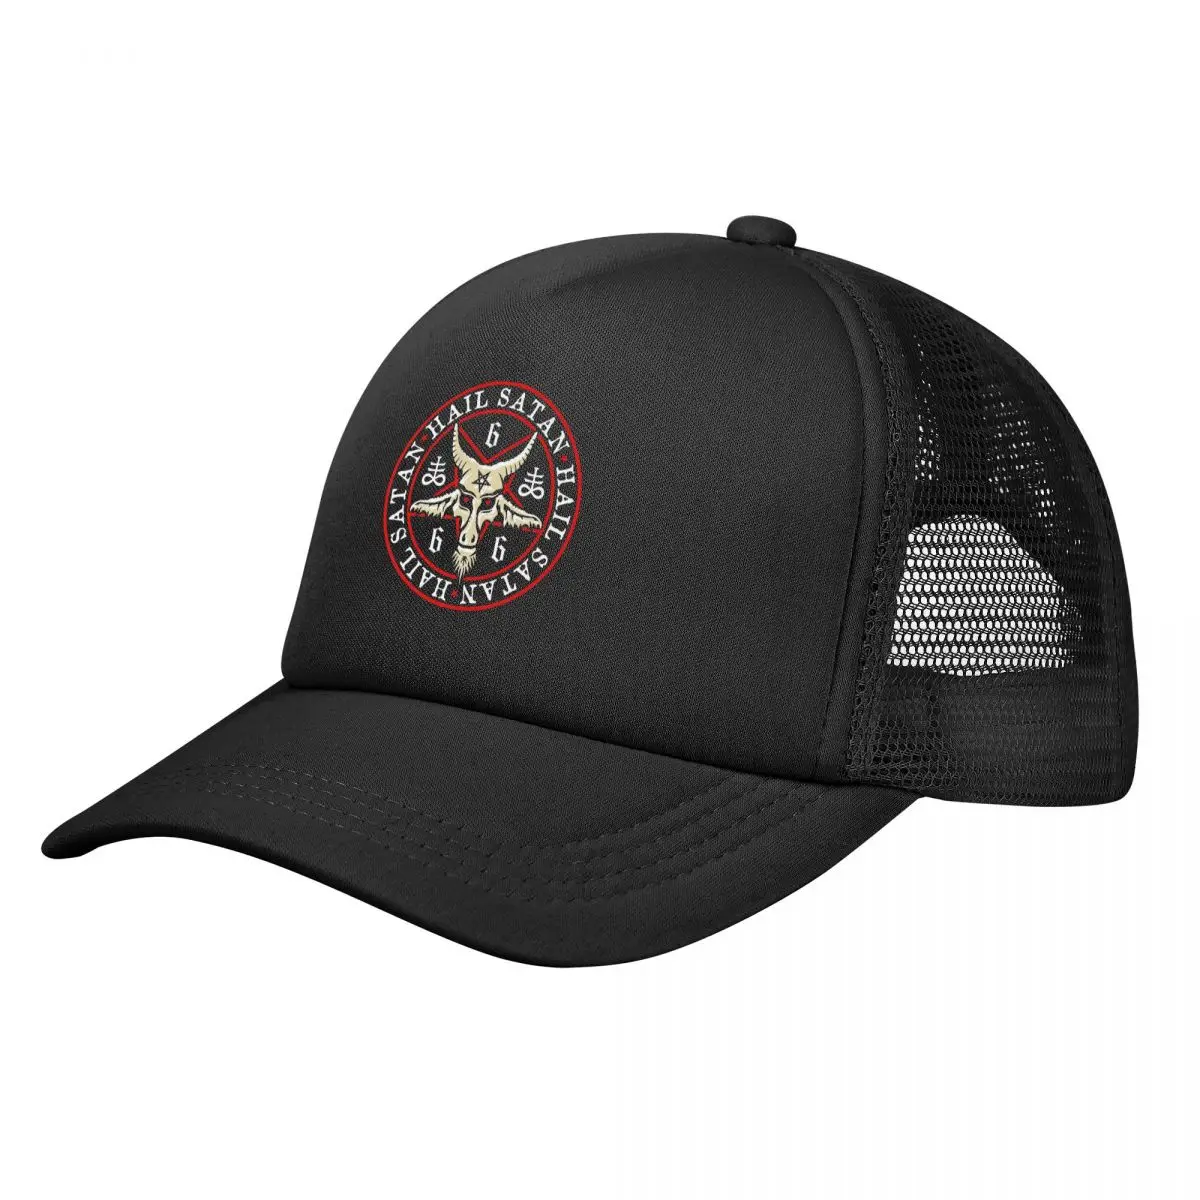 

Hail Satan Baphomet In Occult Inverted Pentagram Mesh Baseball Cap Men Adjustable Snapback Caps Sports Cap Summer Trucker Hat